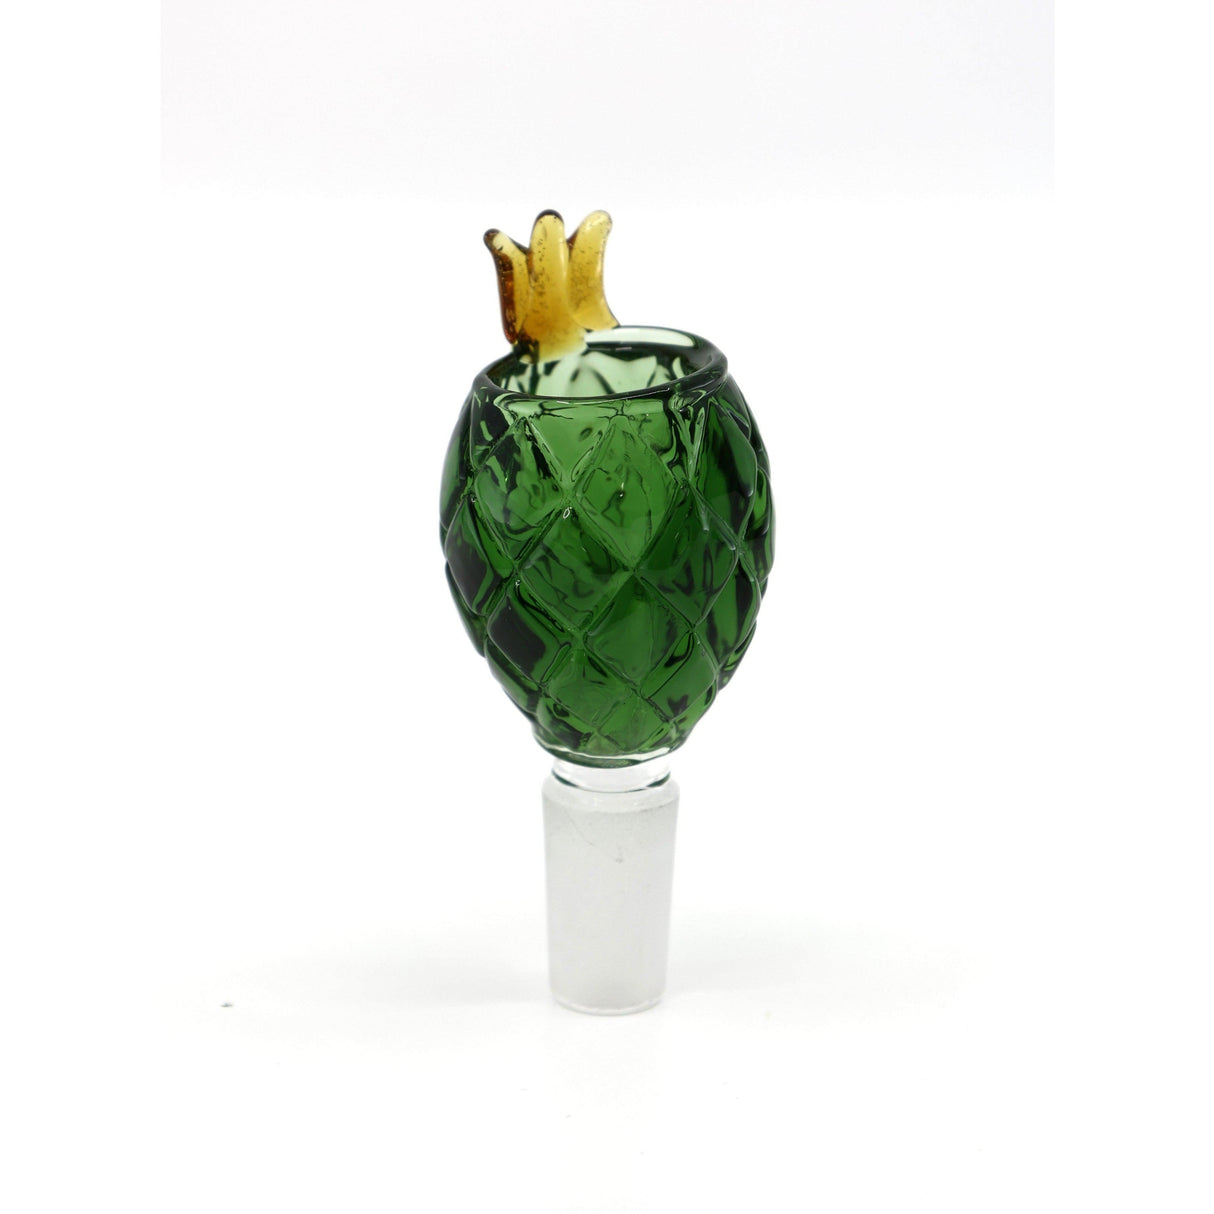 14mm Male Pineapple Shape Glass Bowls